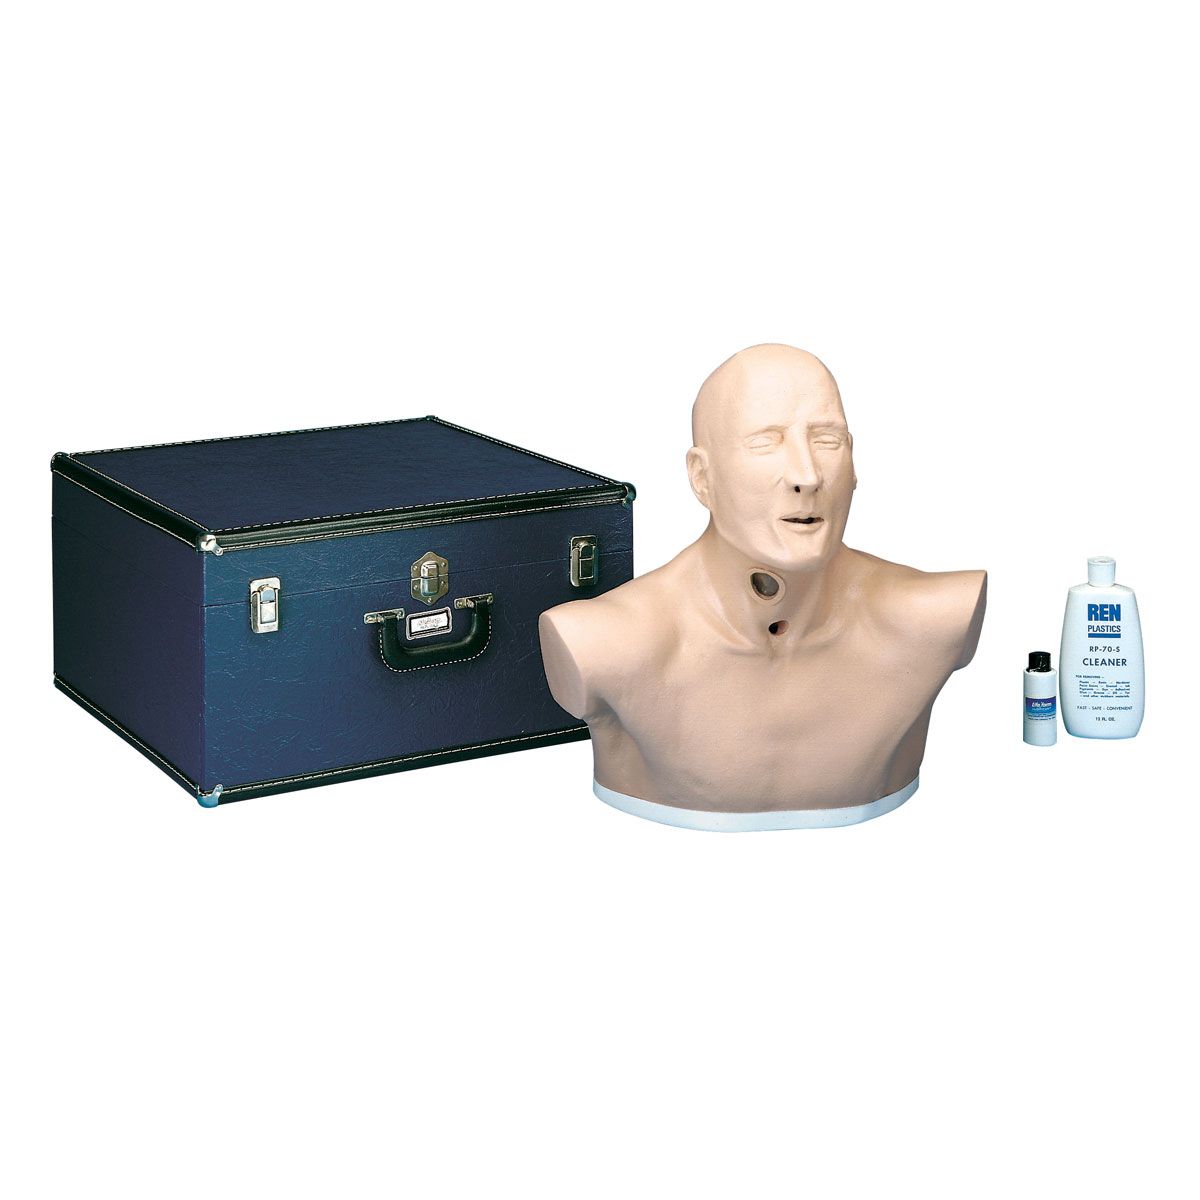 Tracheostomapflege-Simulator, Bestellnummer 1005592, R11083, W44011, LF01083U, Nasco Life/form